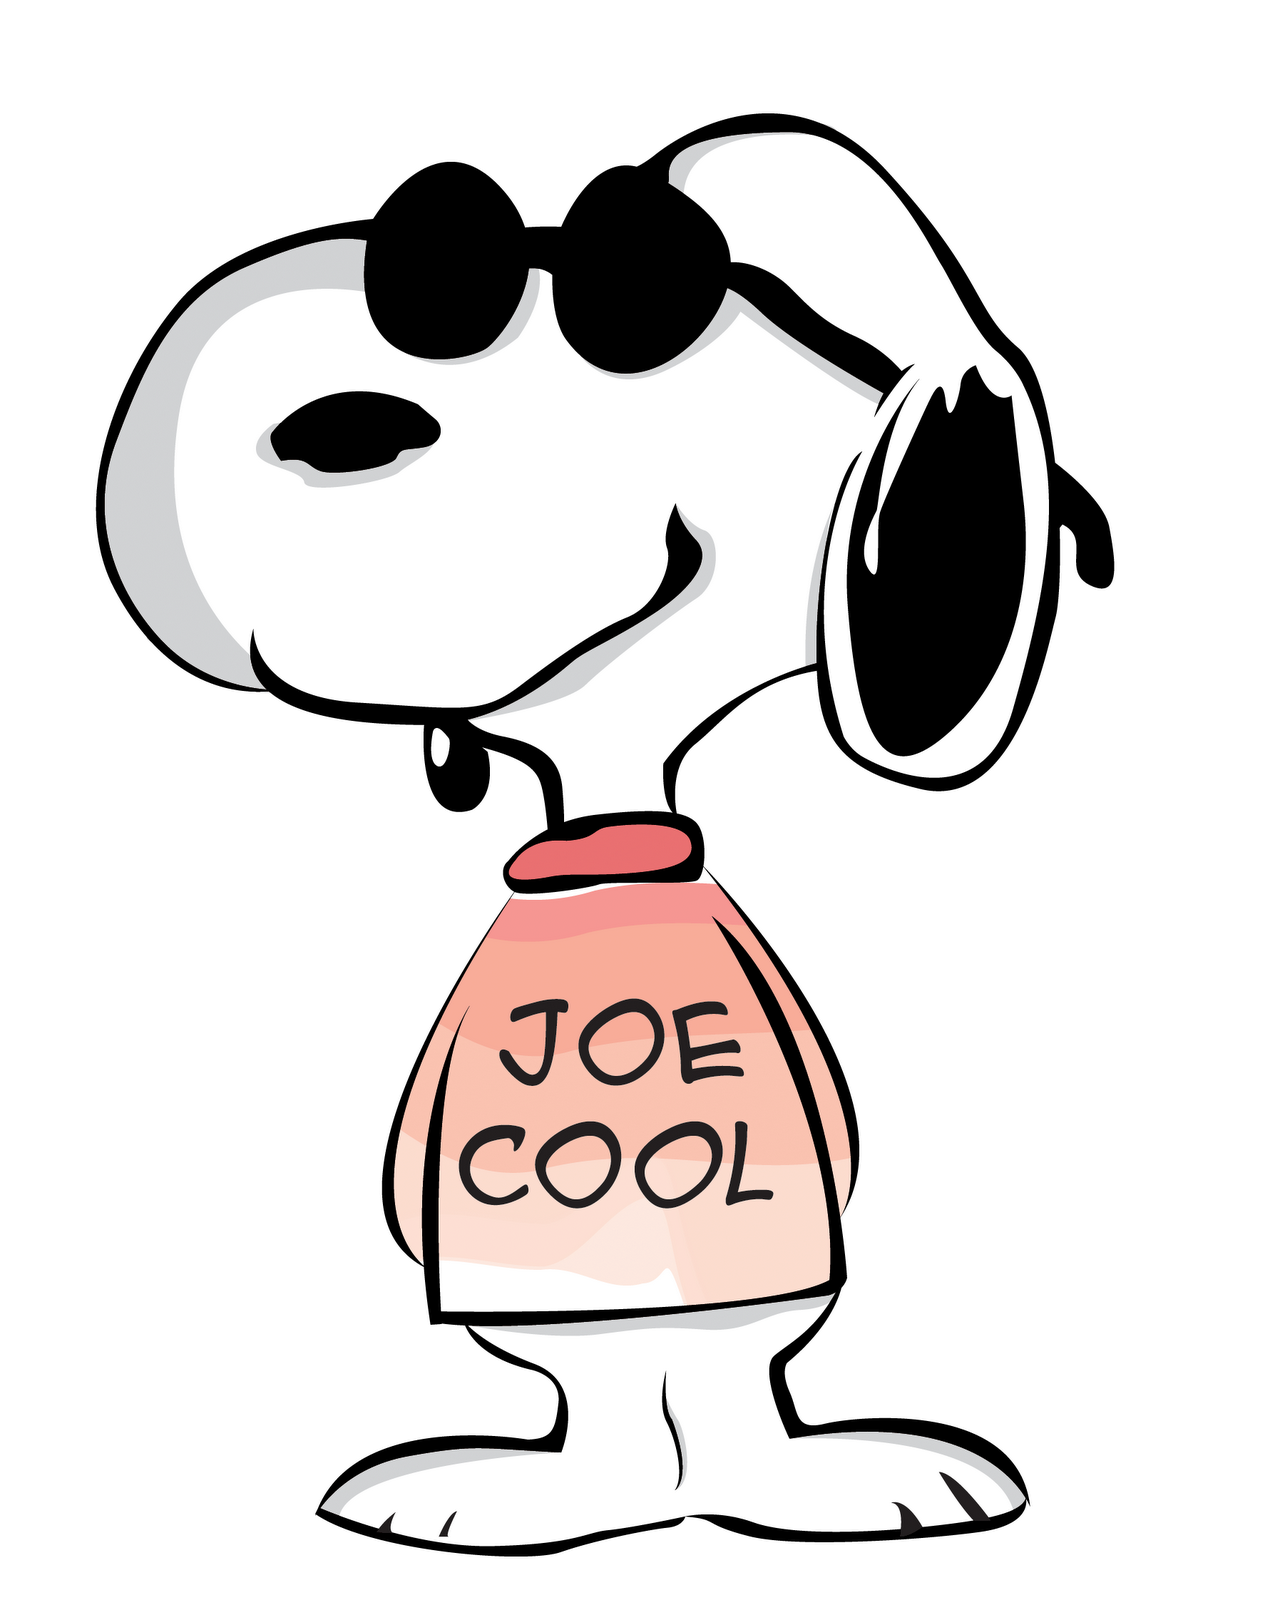 Snoopy dog joe cool